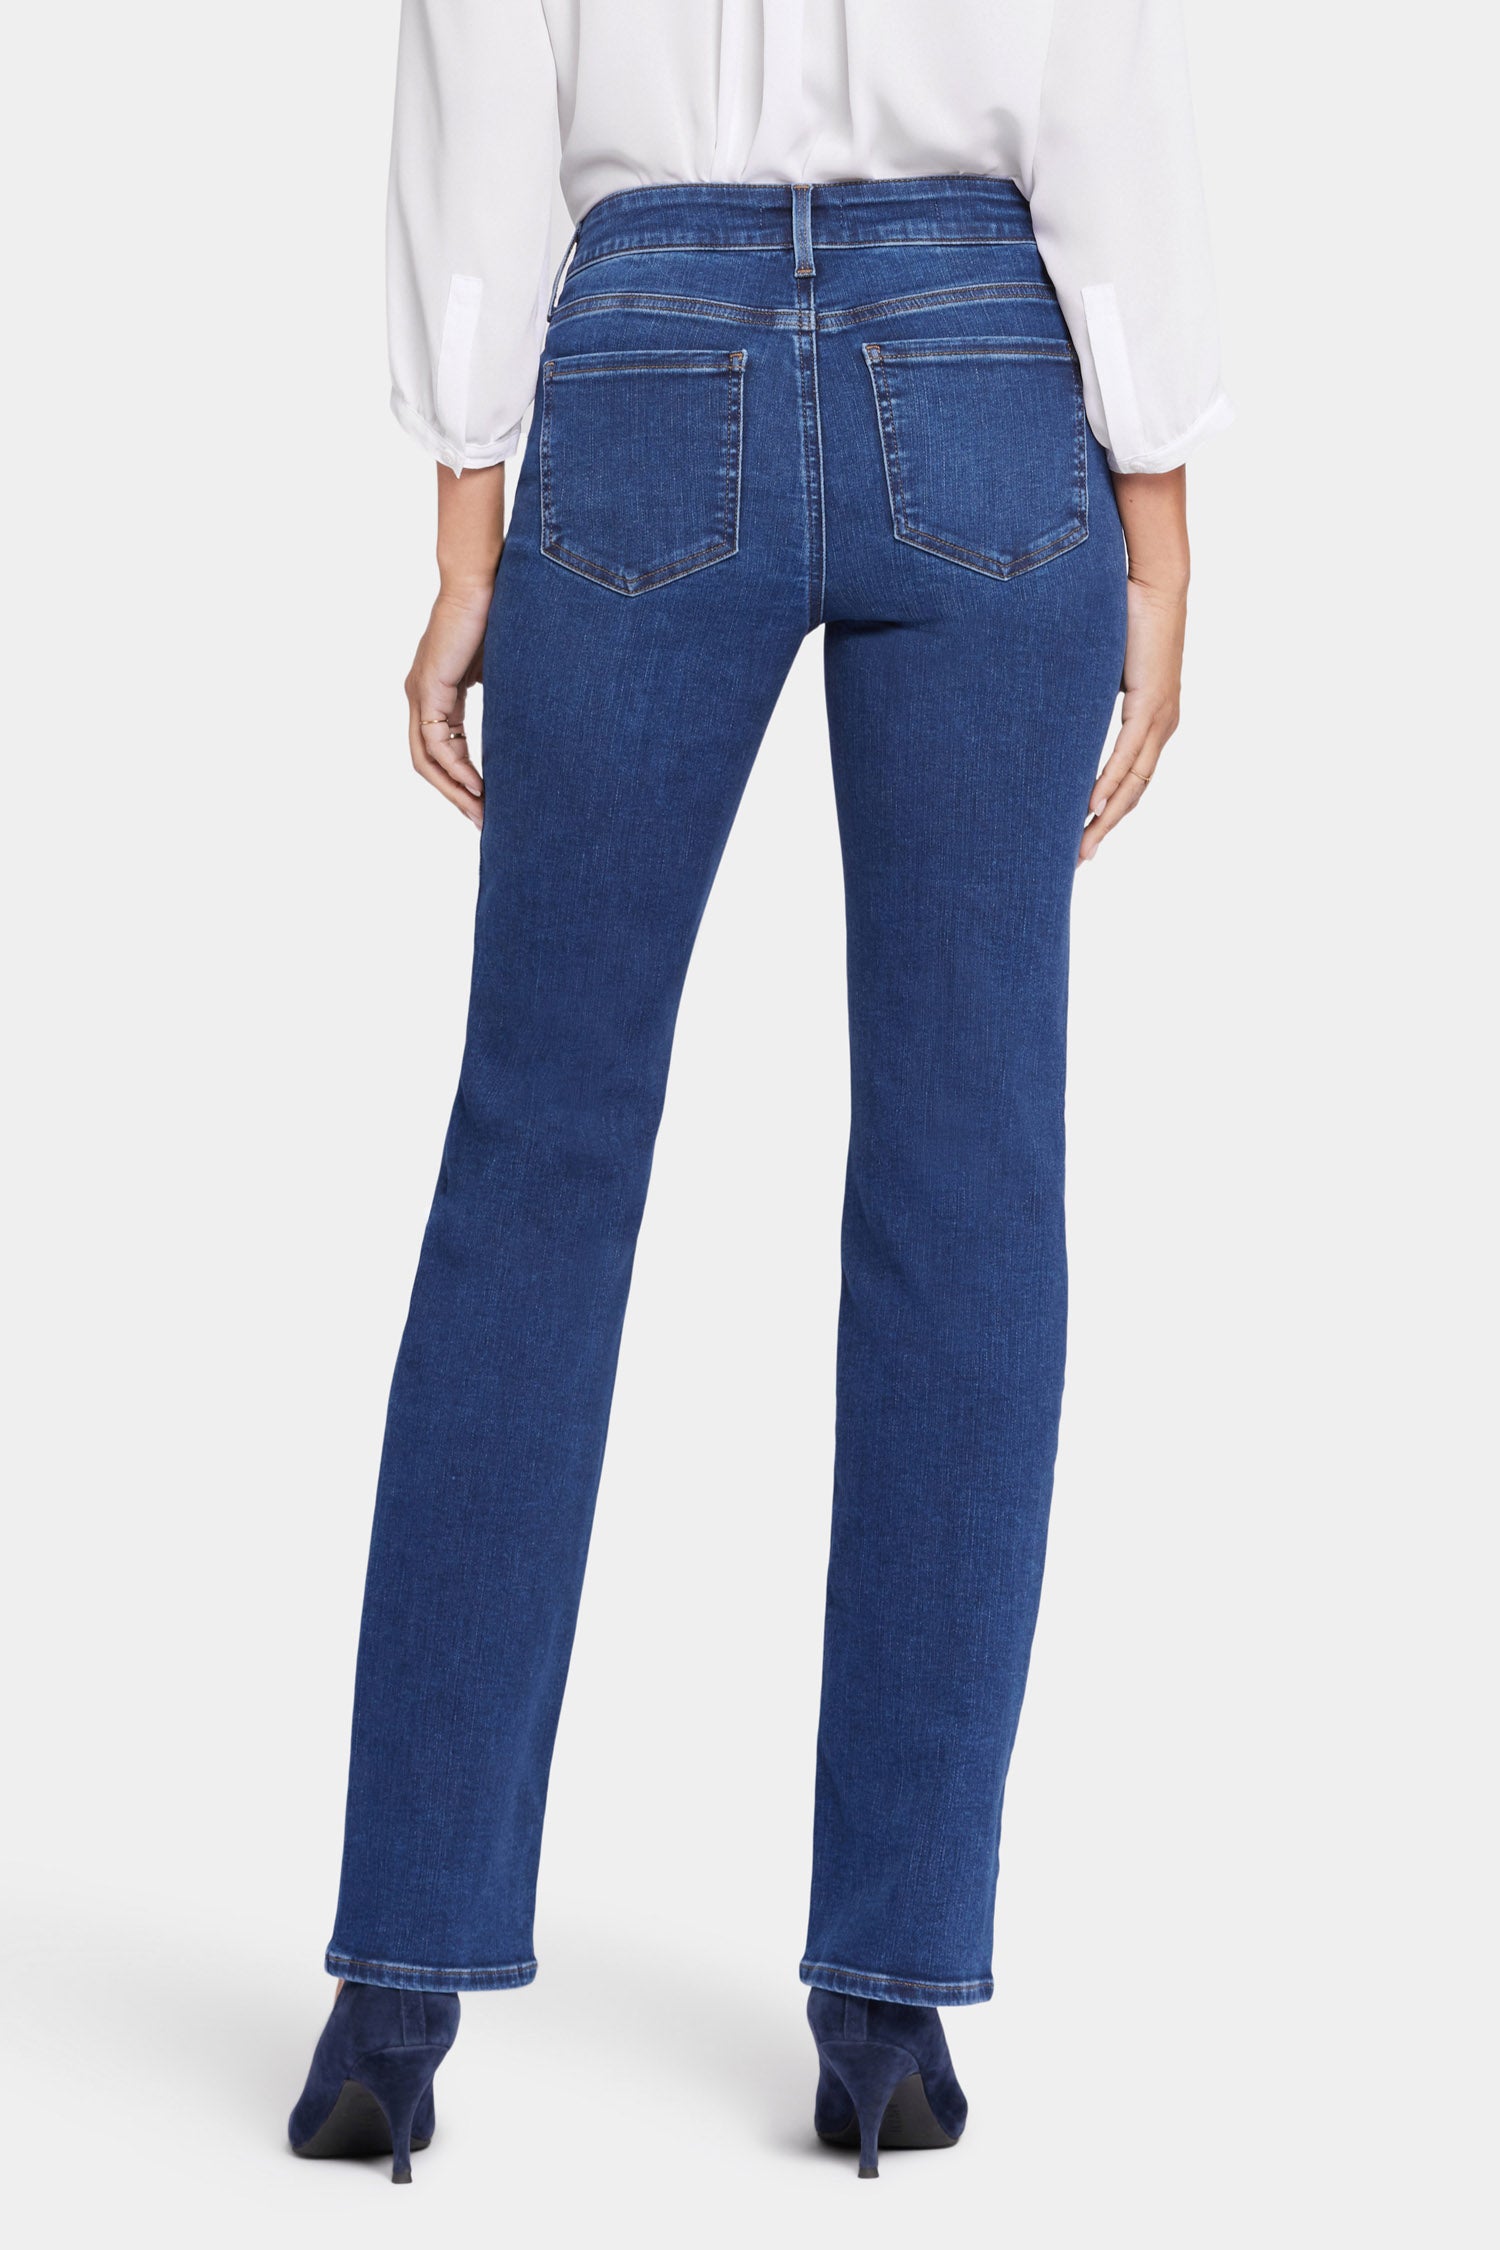 Marilyn Straight Jeans - Cooper Blue | NYDJ